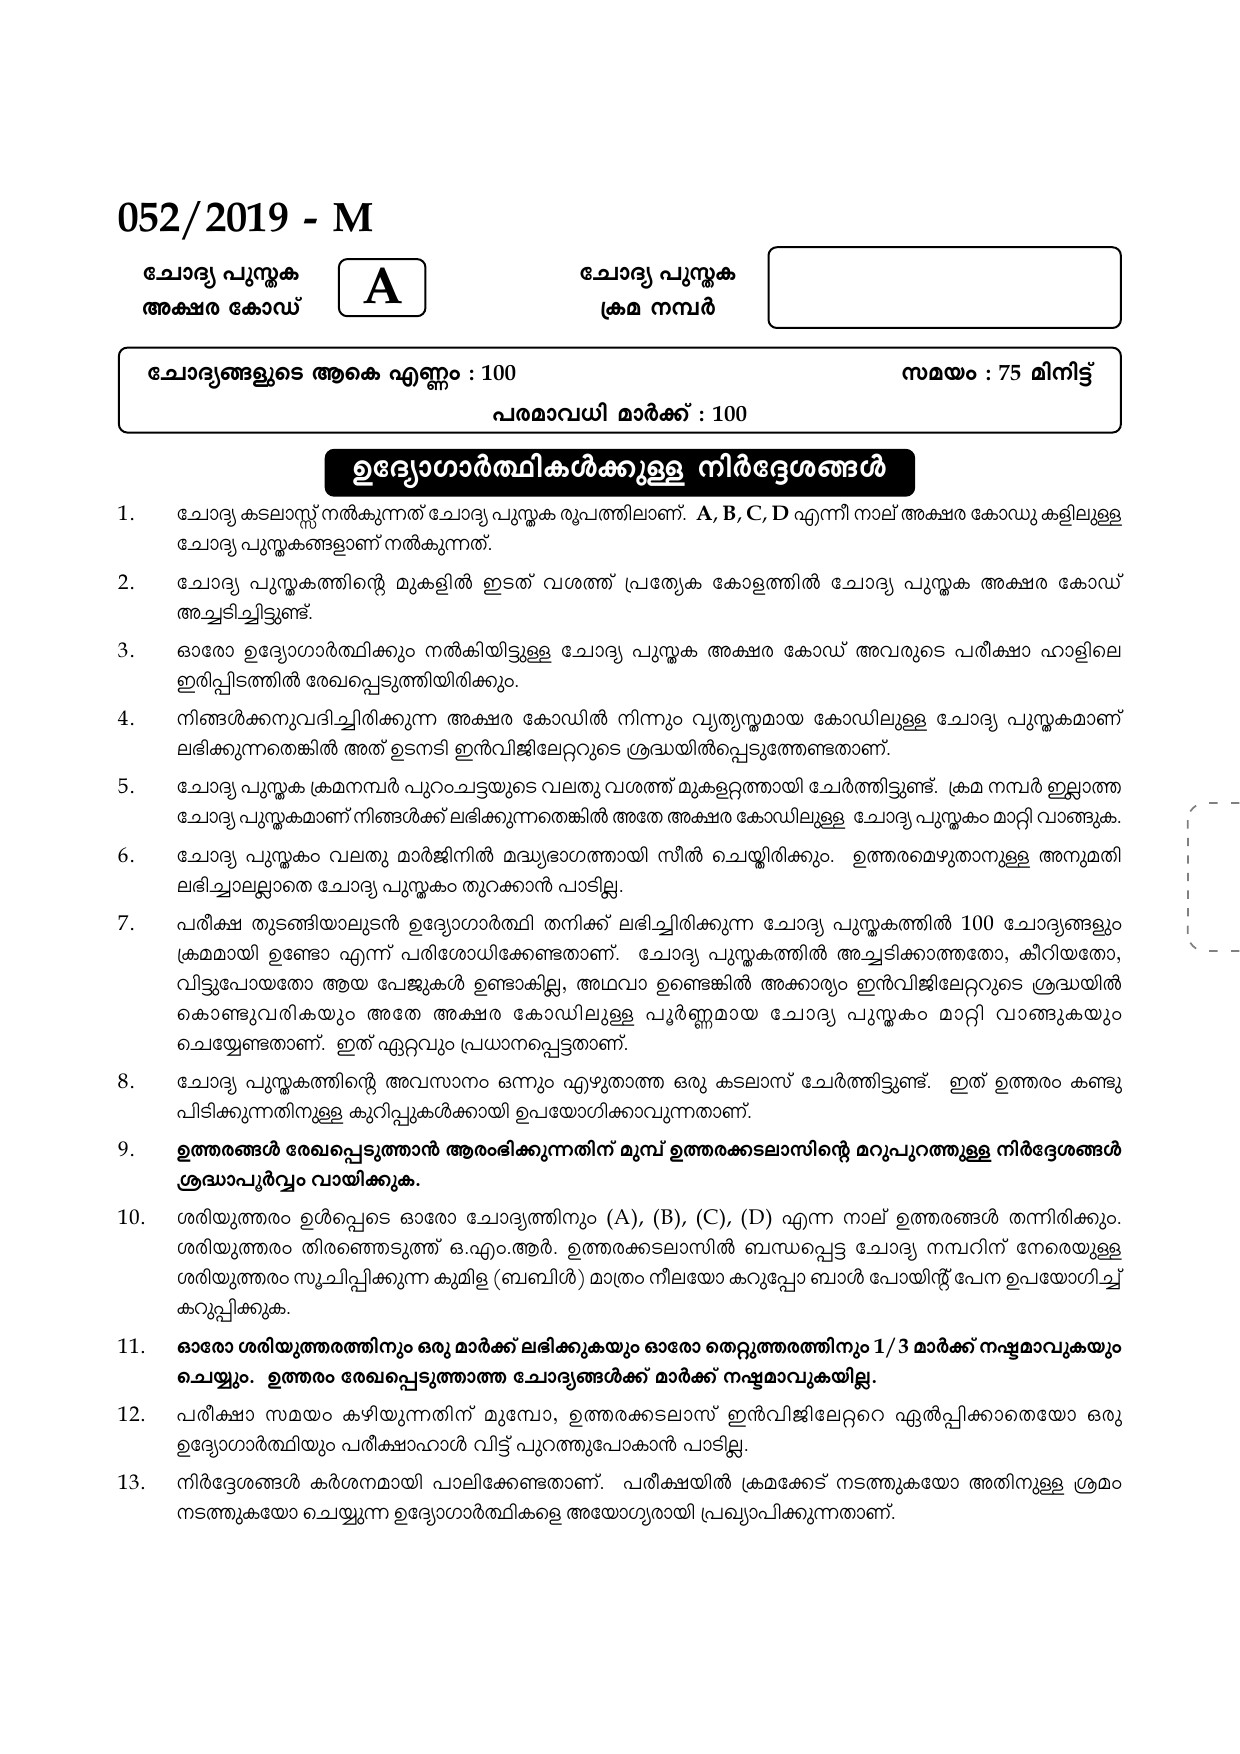 Village Extension Officer Grade II Exam Paper 2019 Code 522019 M 1